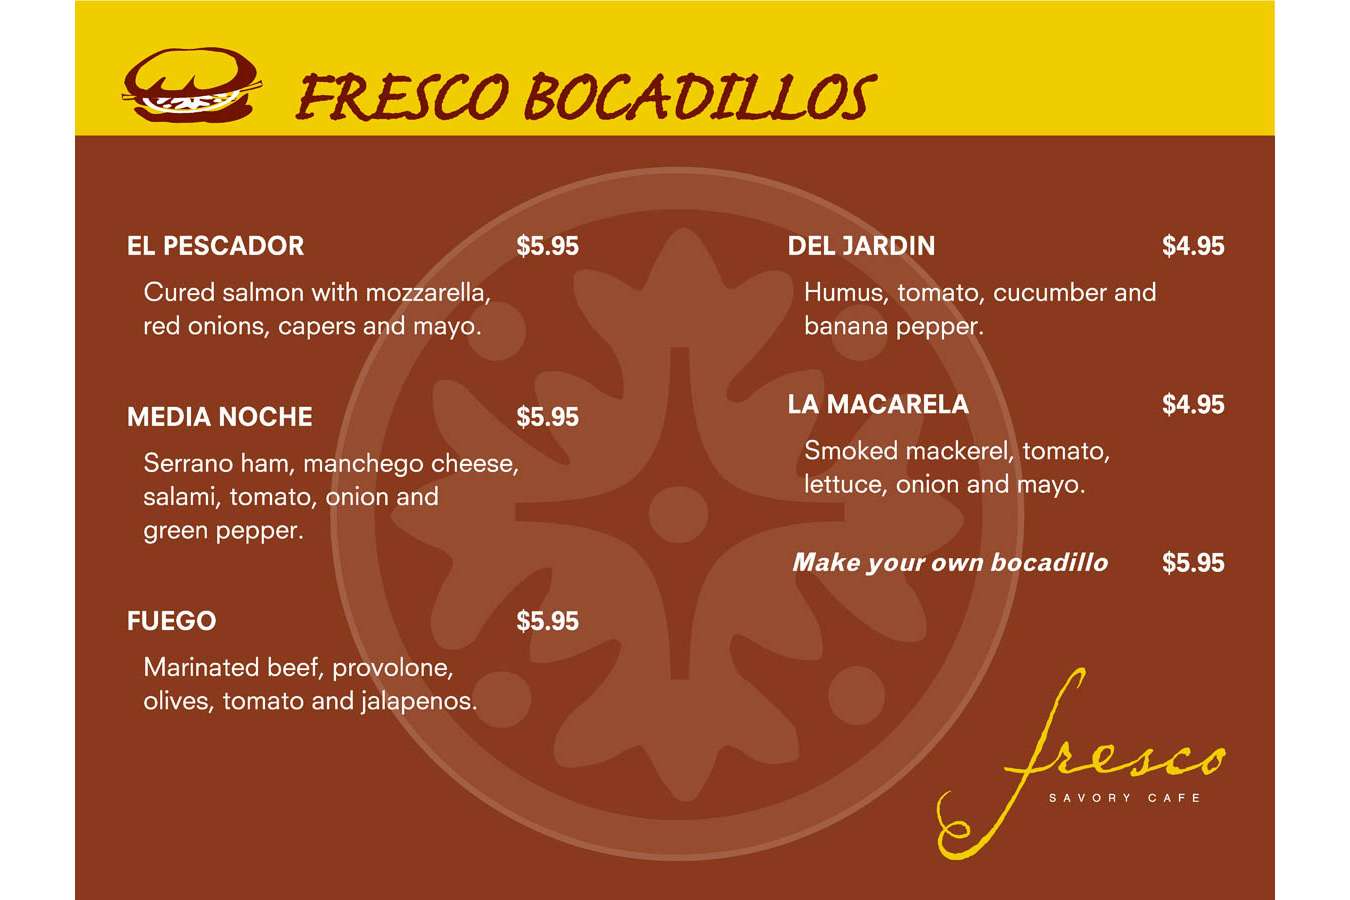 FRES BOCADILLOS : Bocadillos means sandwiches in spanish